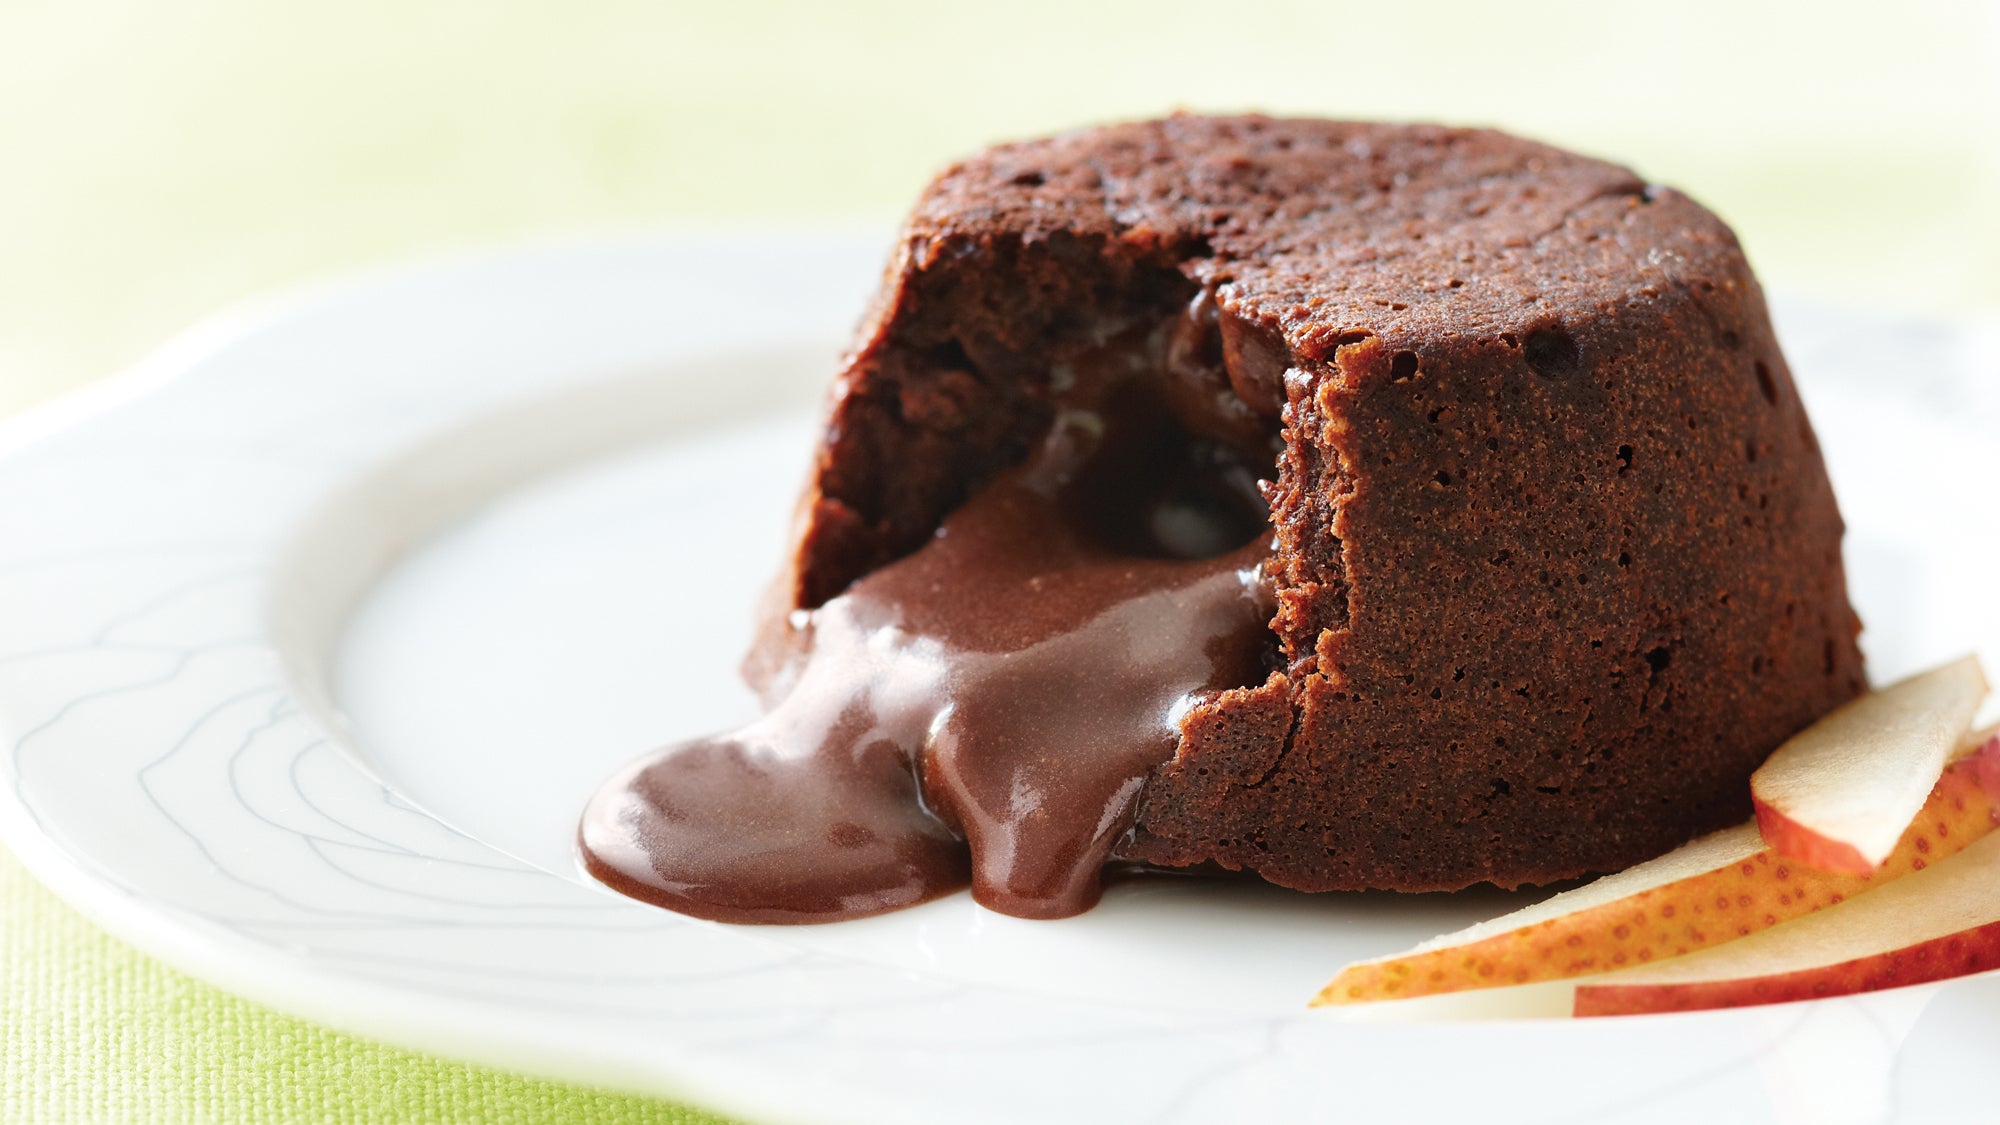 Molten chocolate cake - Wikipedia